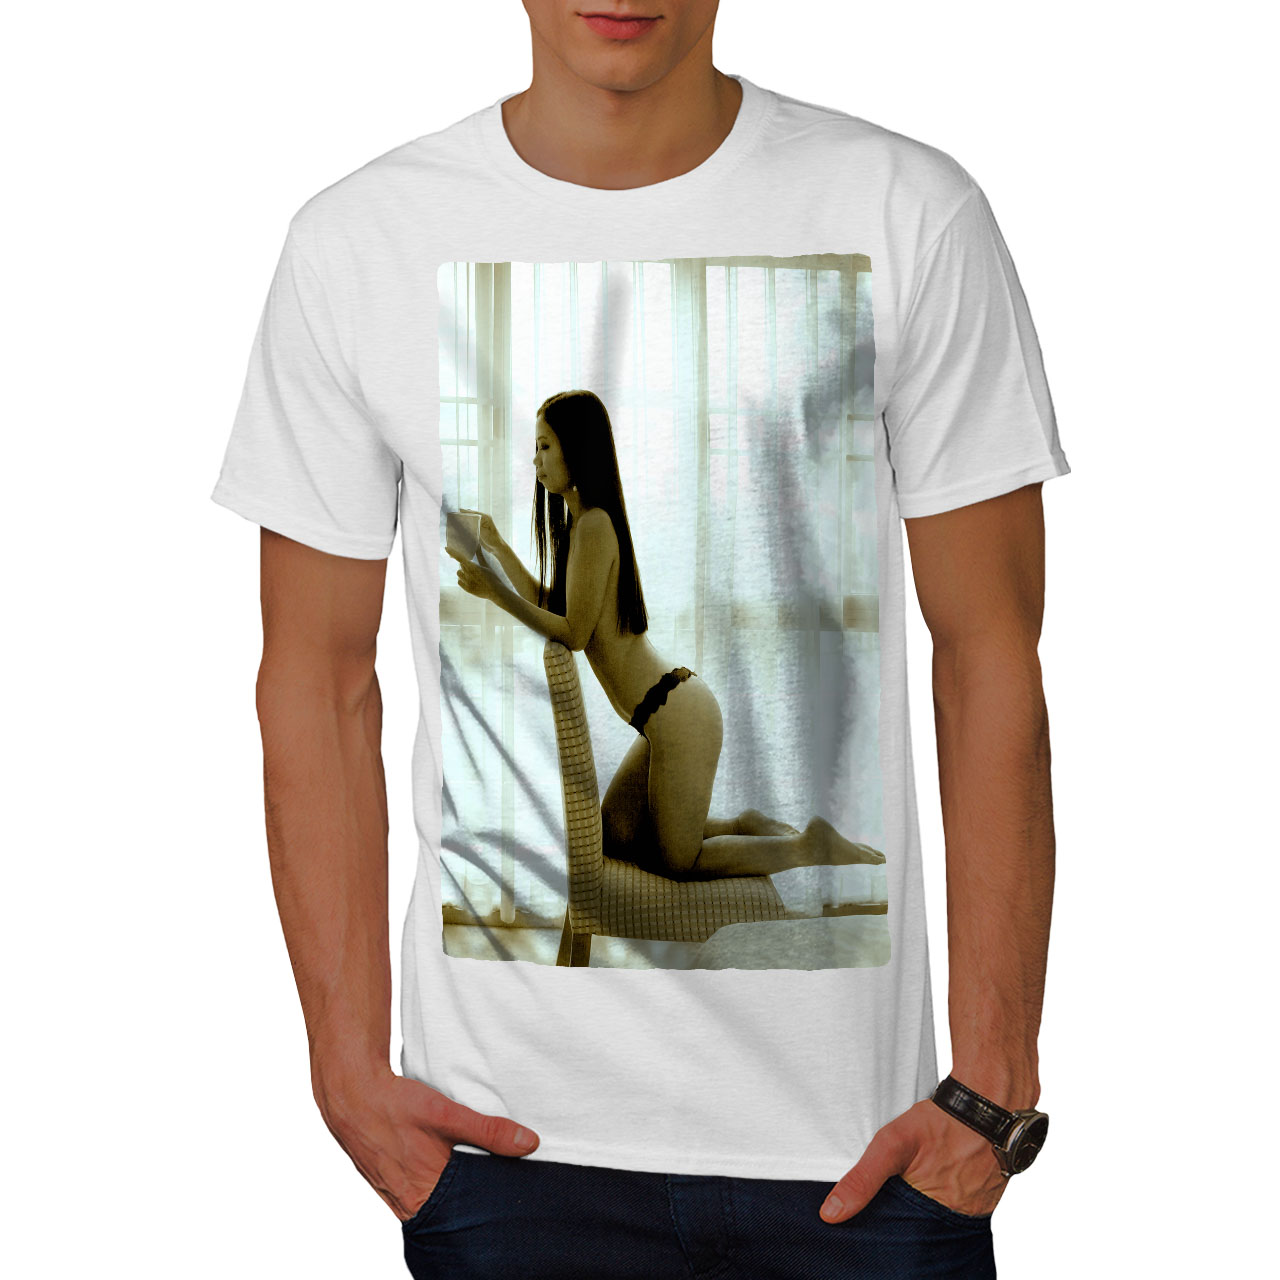 Wellcoda Girl Hot Body Booty Mens T-shirt, Naked Graphic 